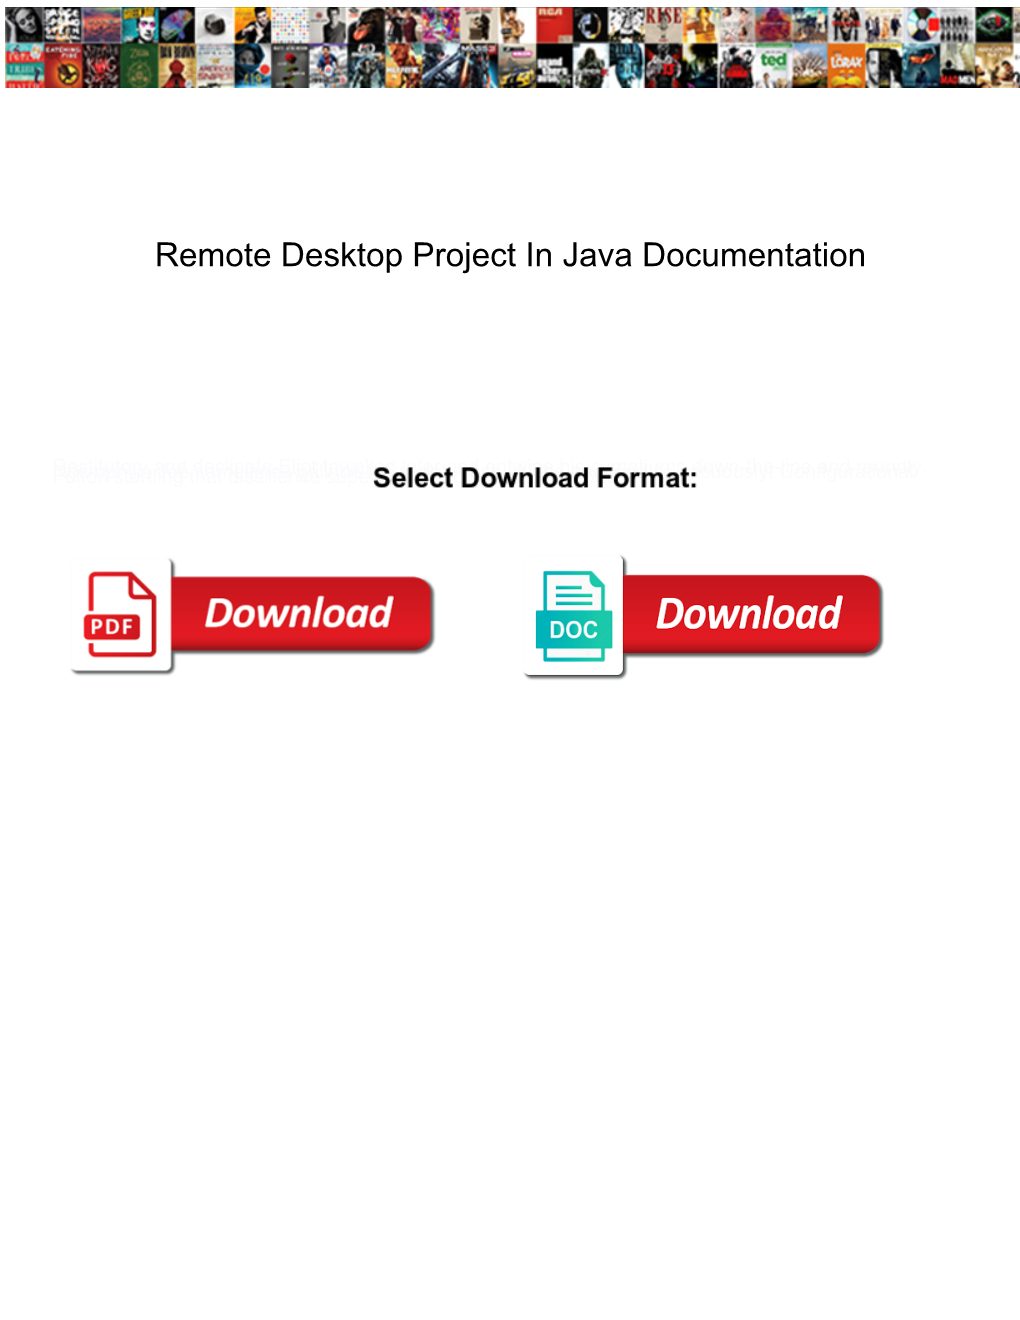 Remote Desktop Project in Java Documentation